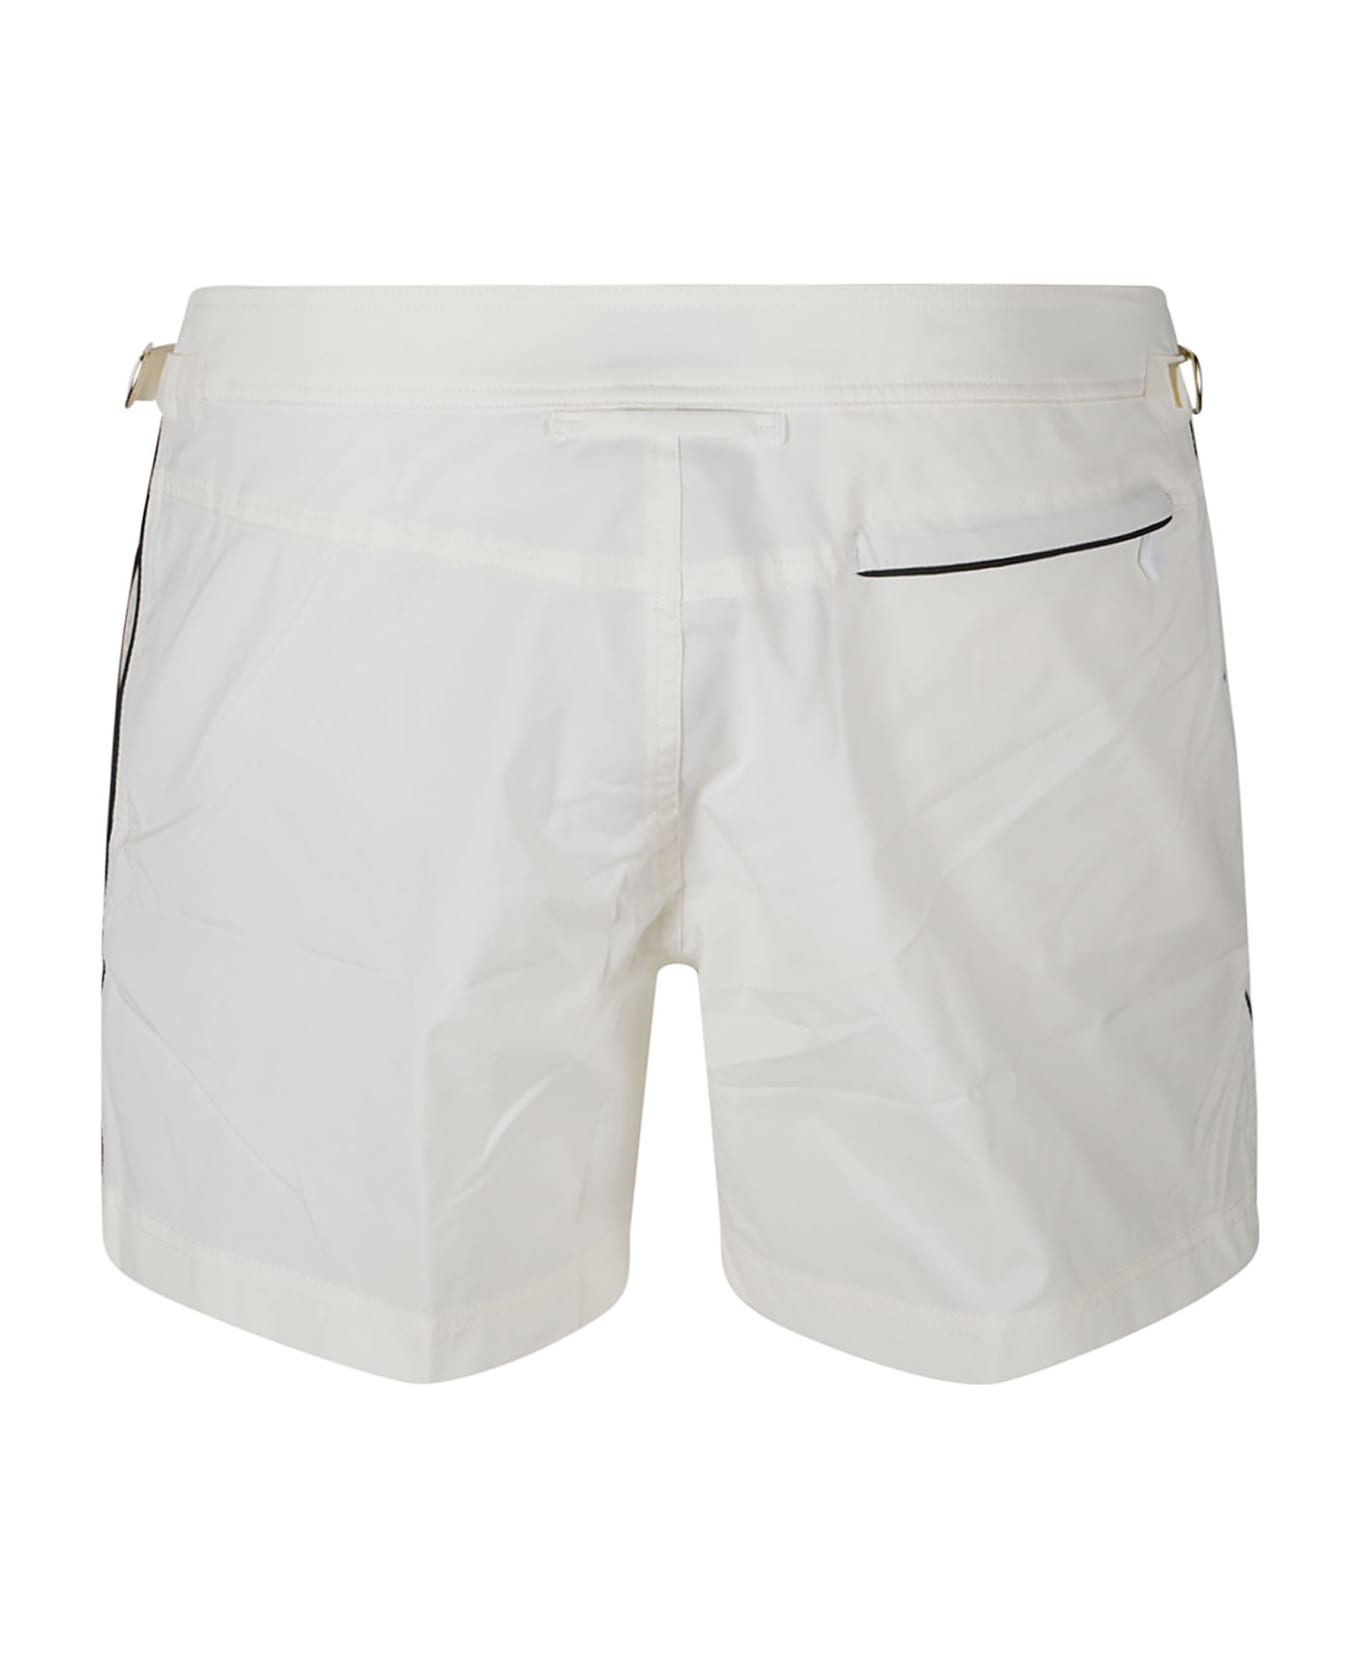 Tom Ford Side Stripe Classic Shorts - White/Black